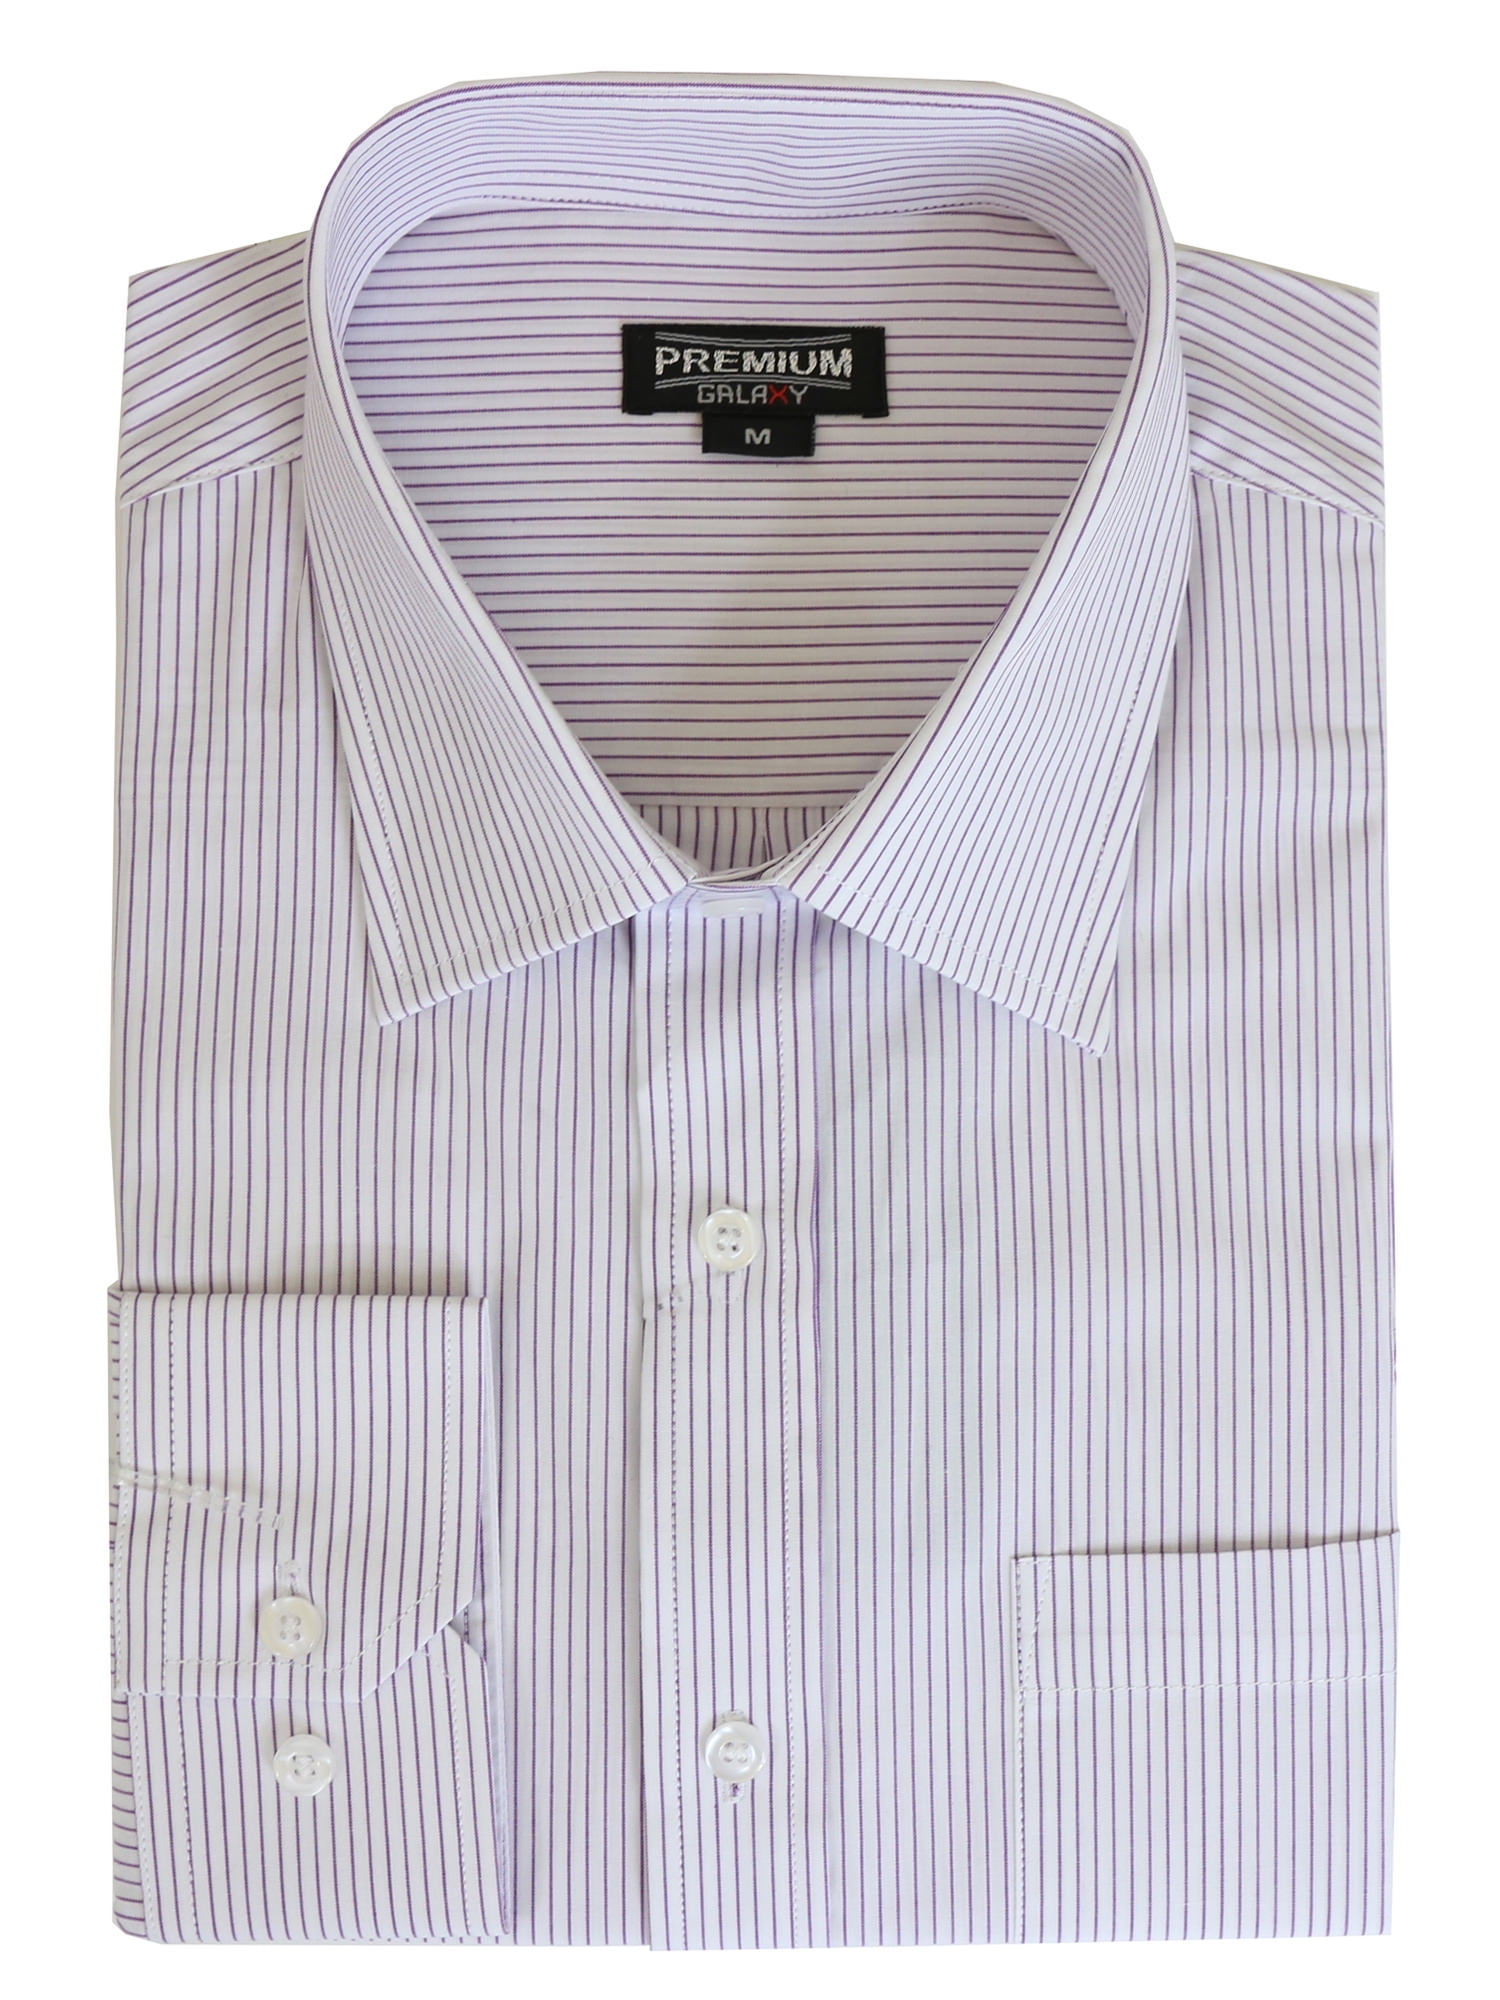 Men's BIG size 100% Cotton Shirt Regular Collar Check Formal Casual Long Sleeve 